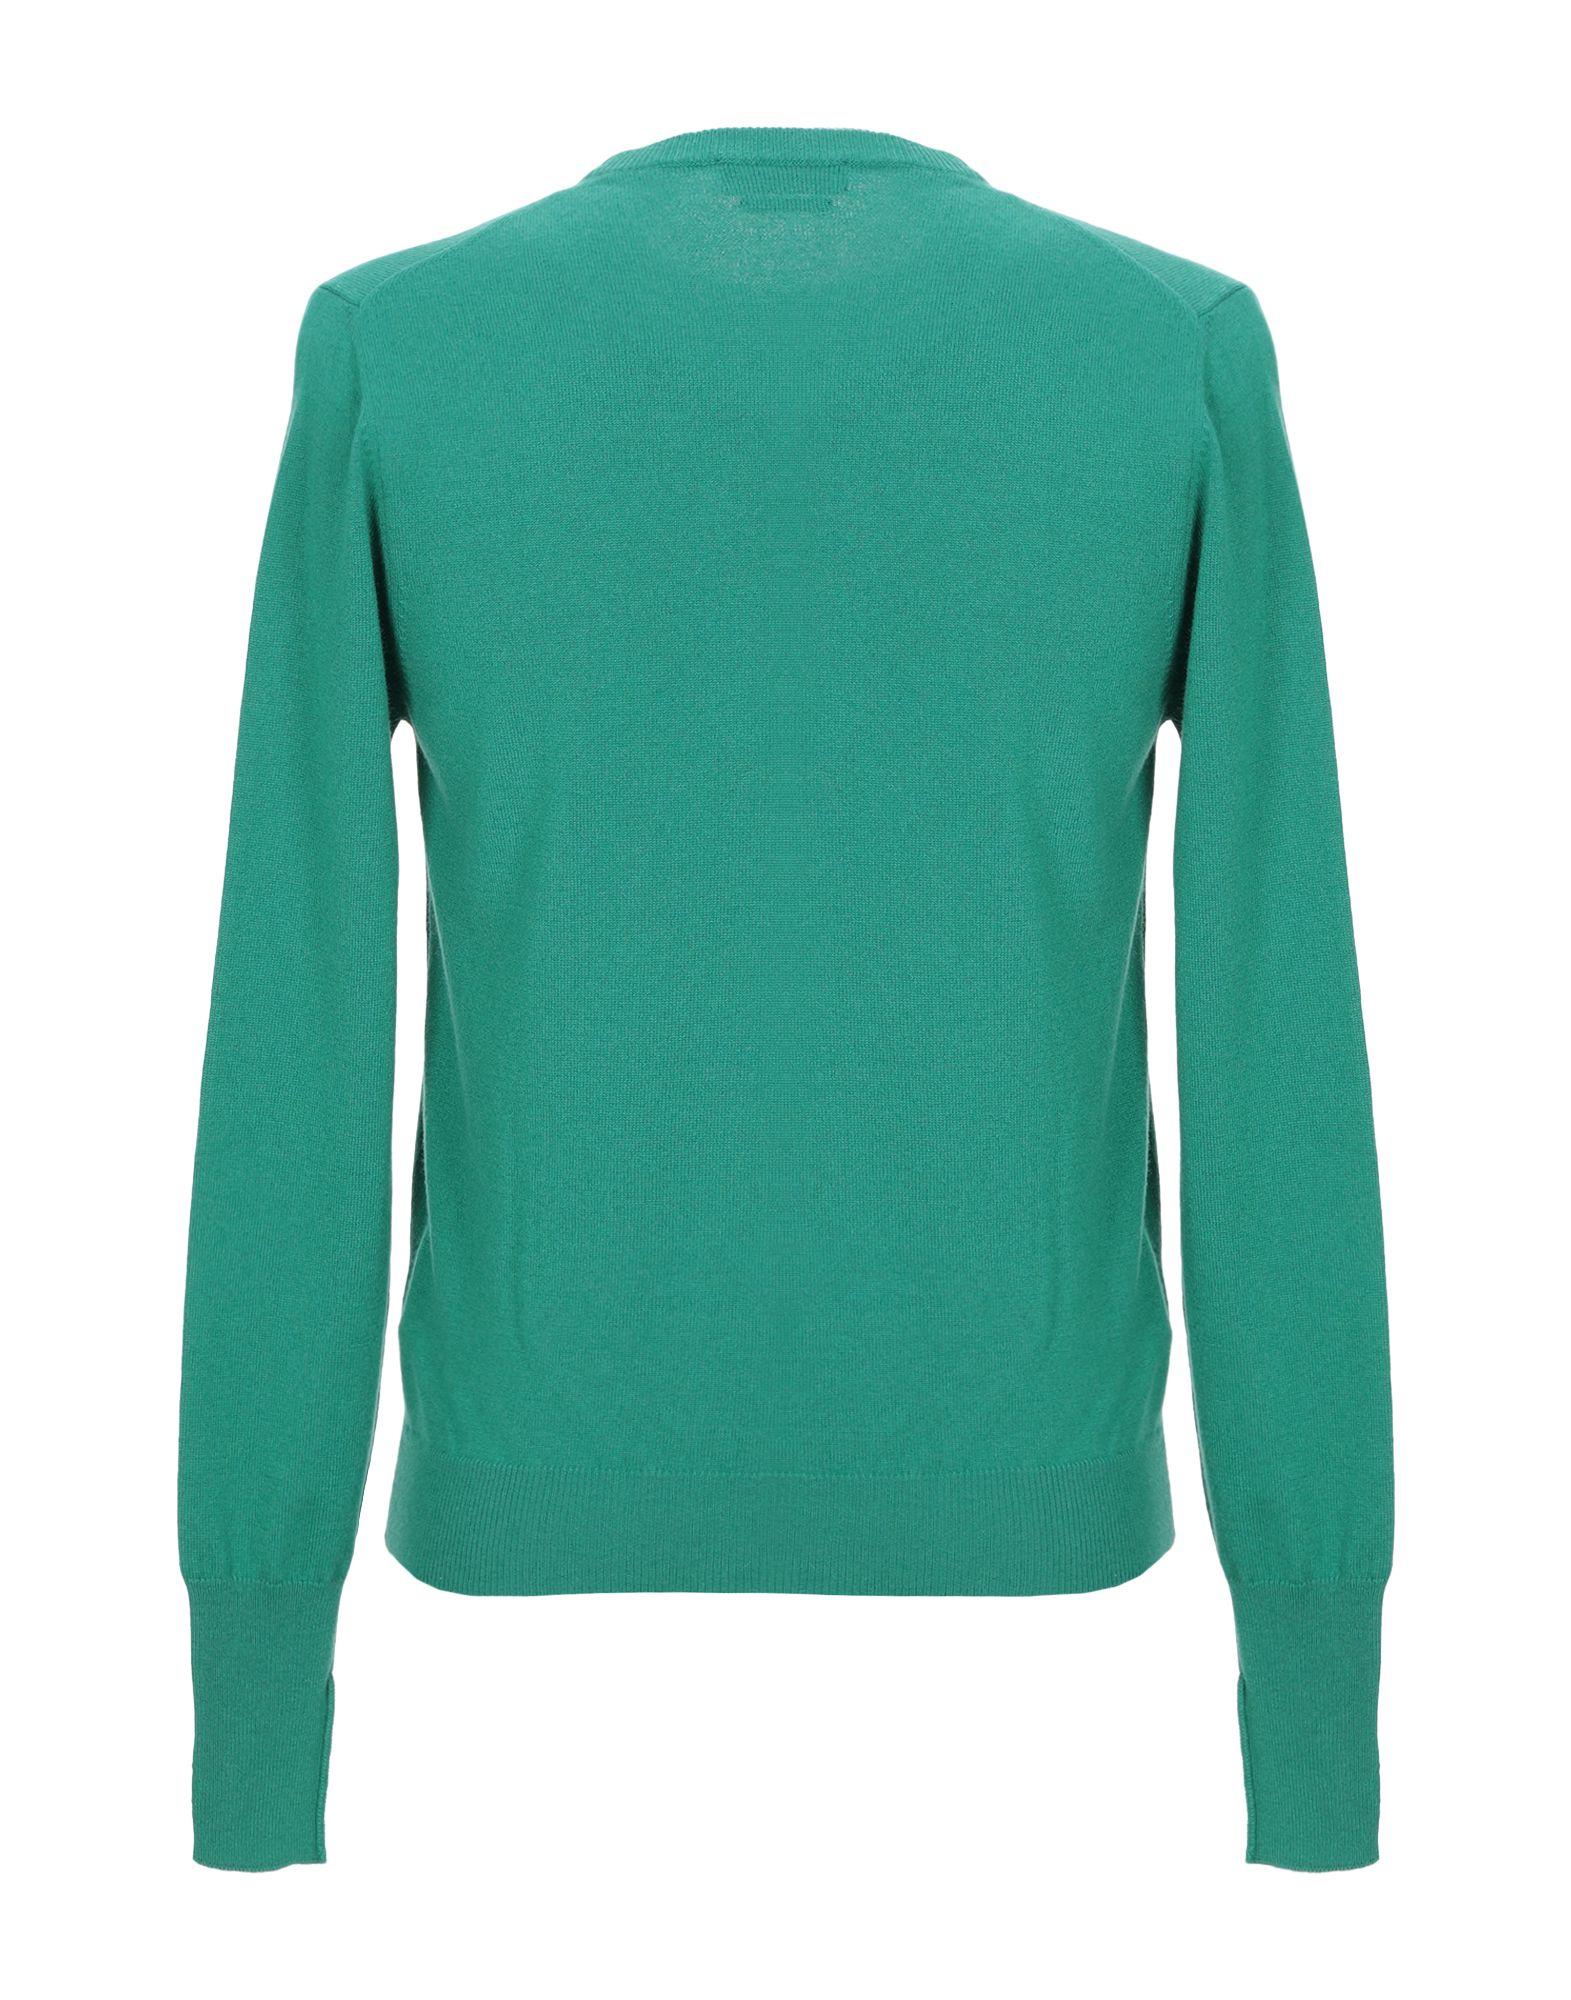 Ballantyne Cashmere Sweater in Green for Men - Lyst